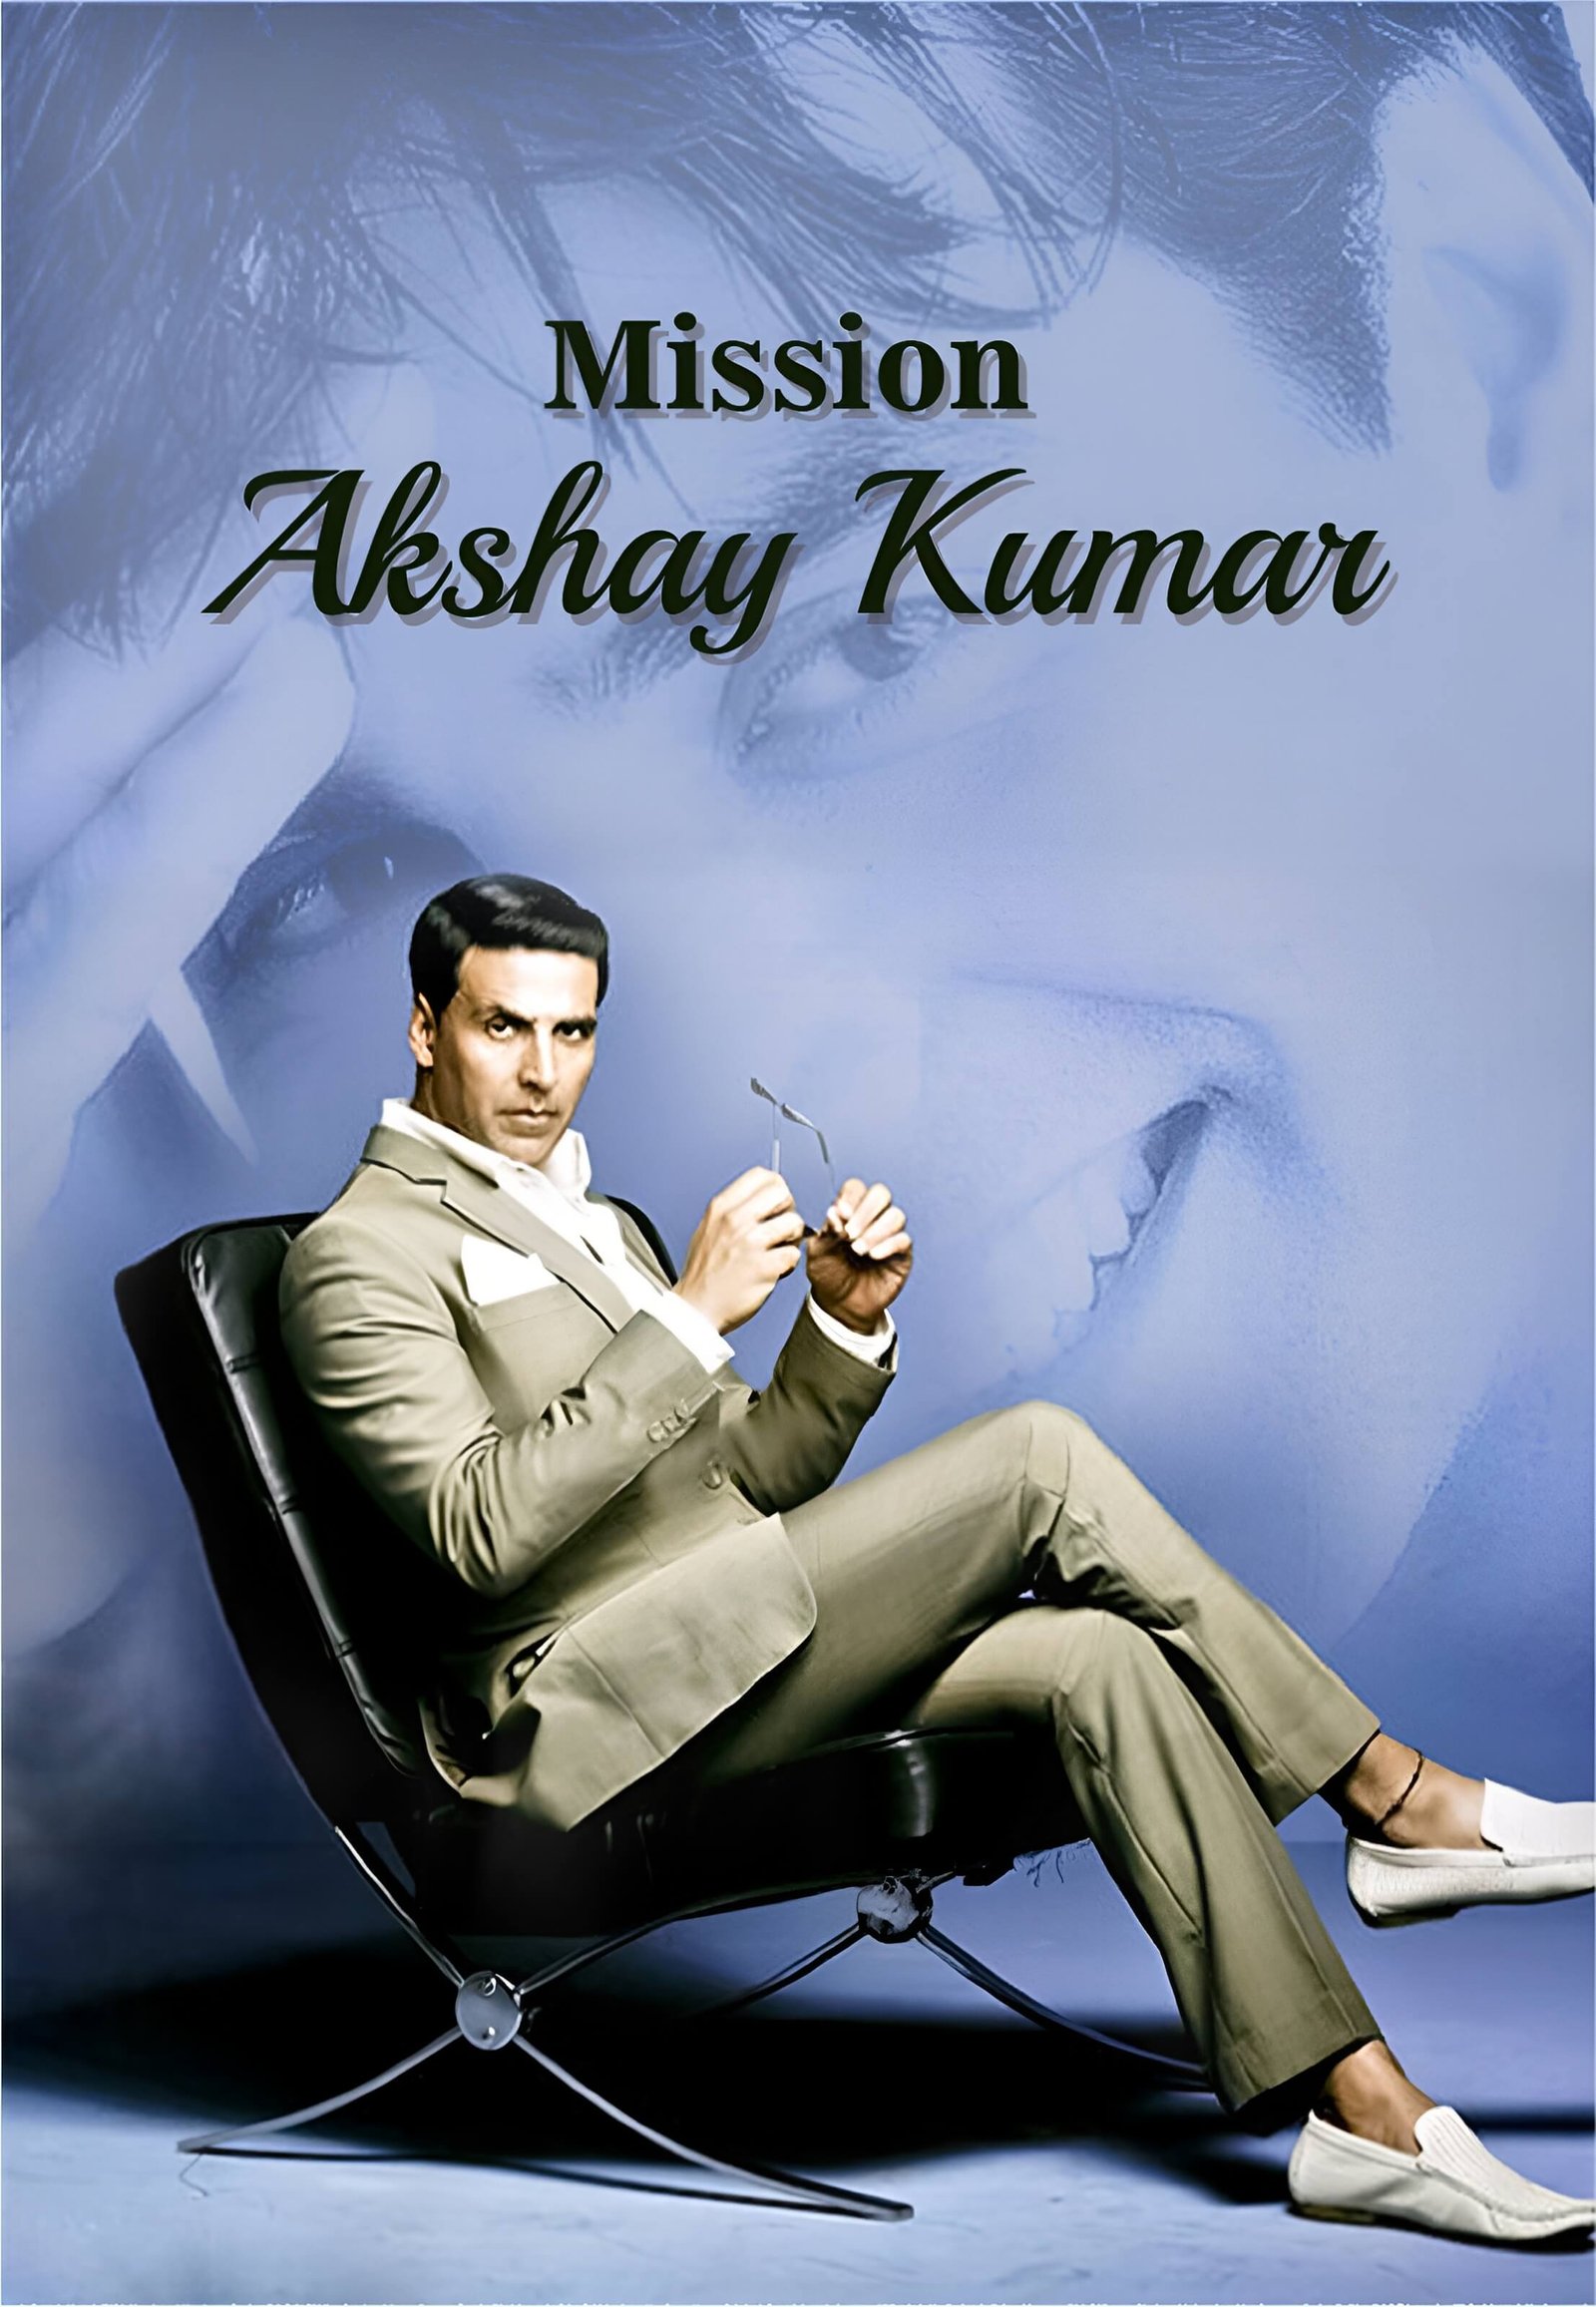 Misson of Akshay kumar